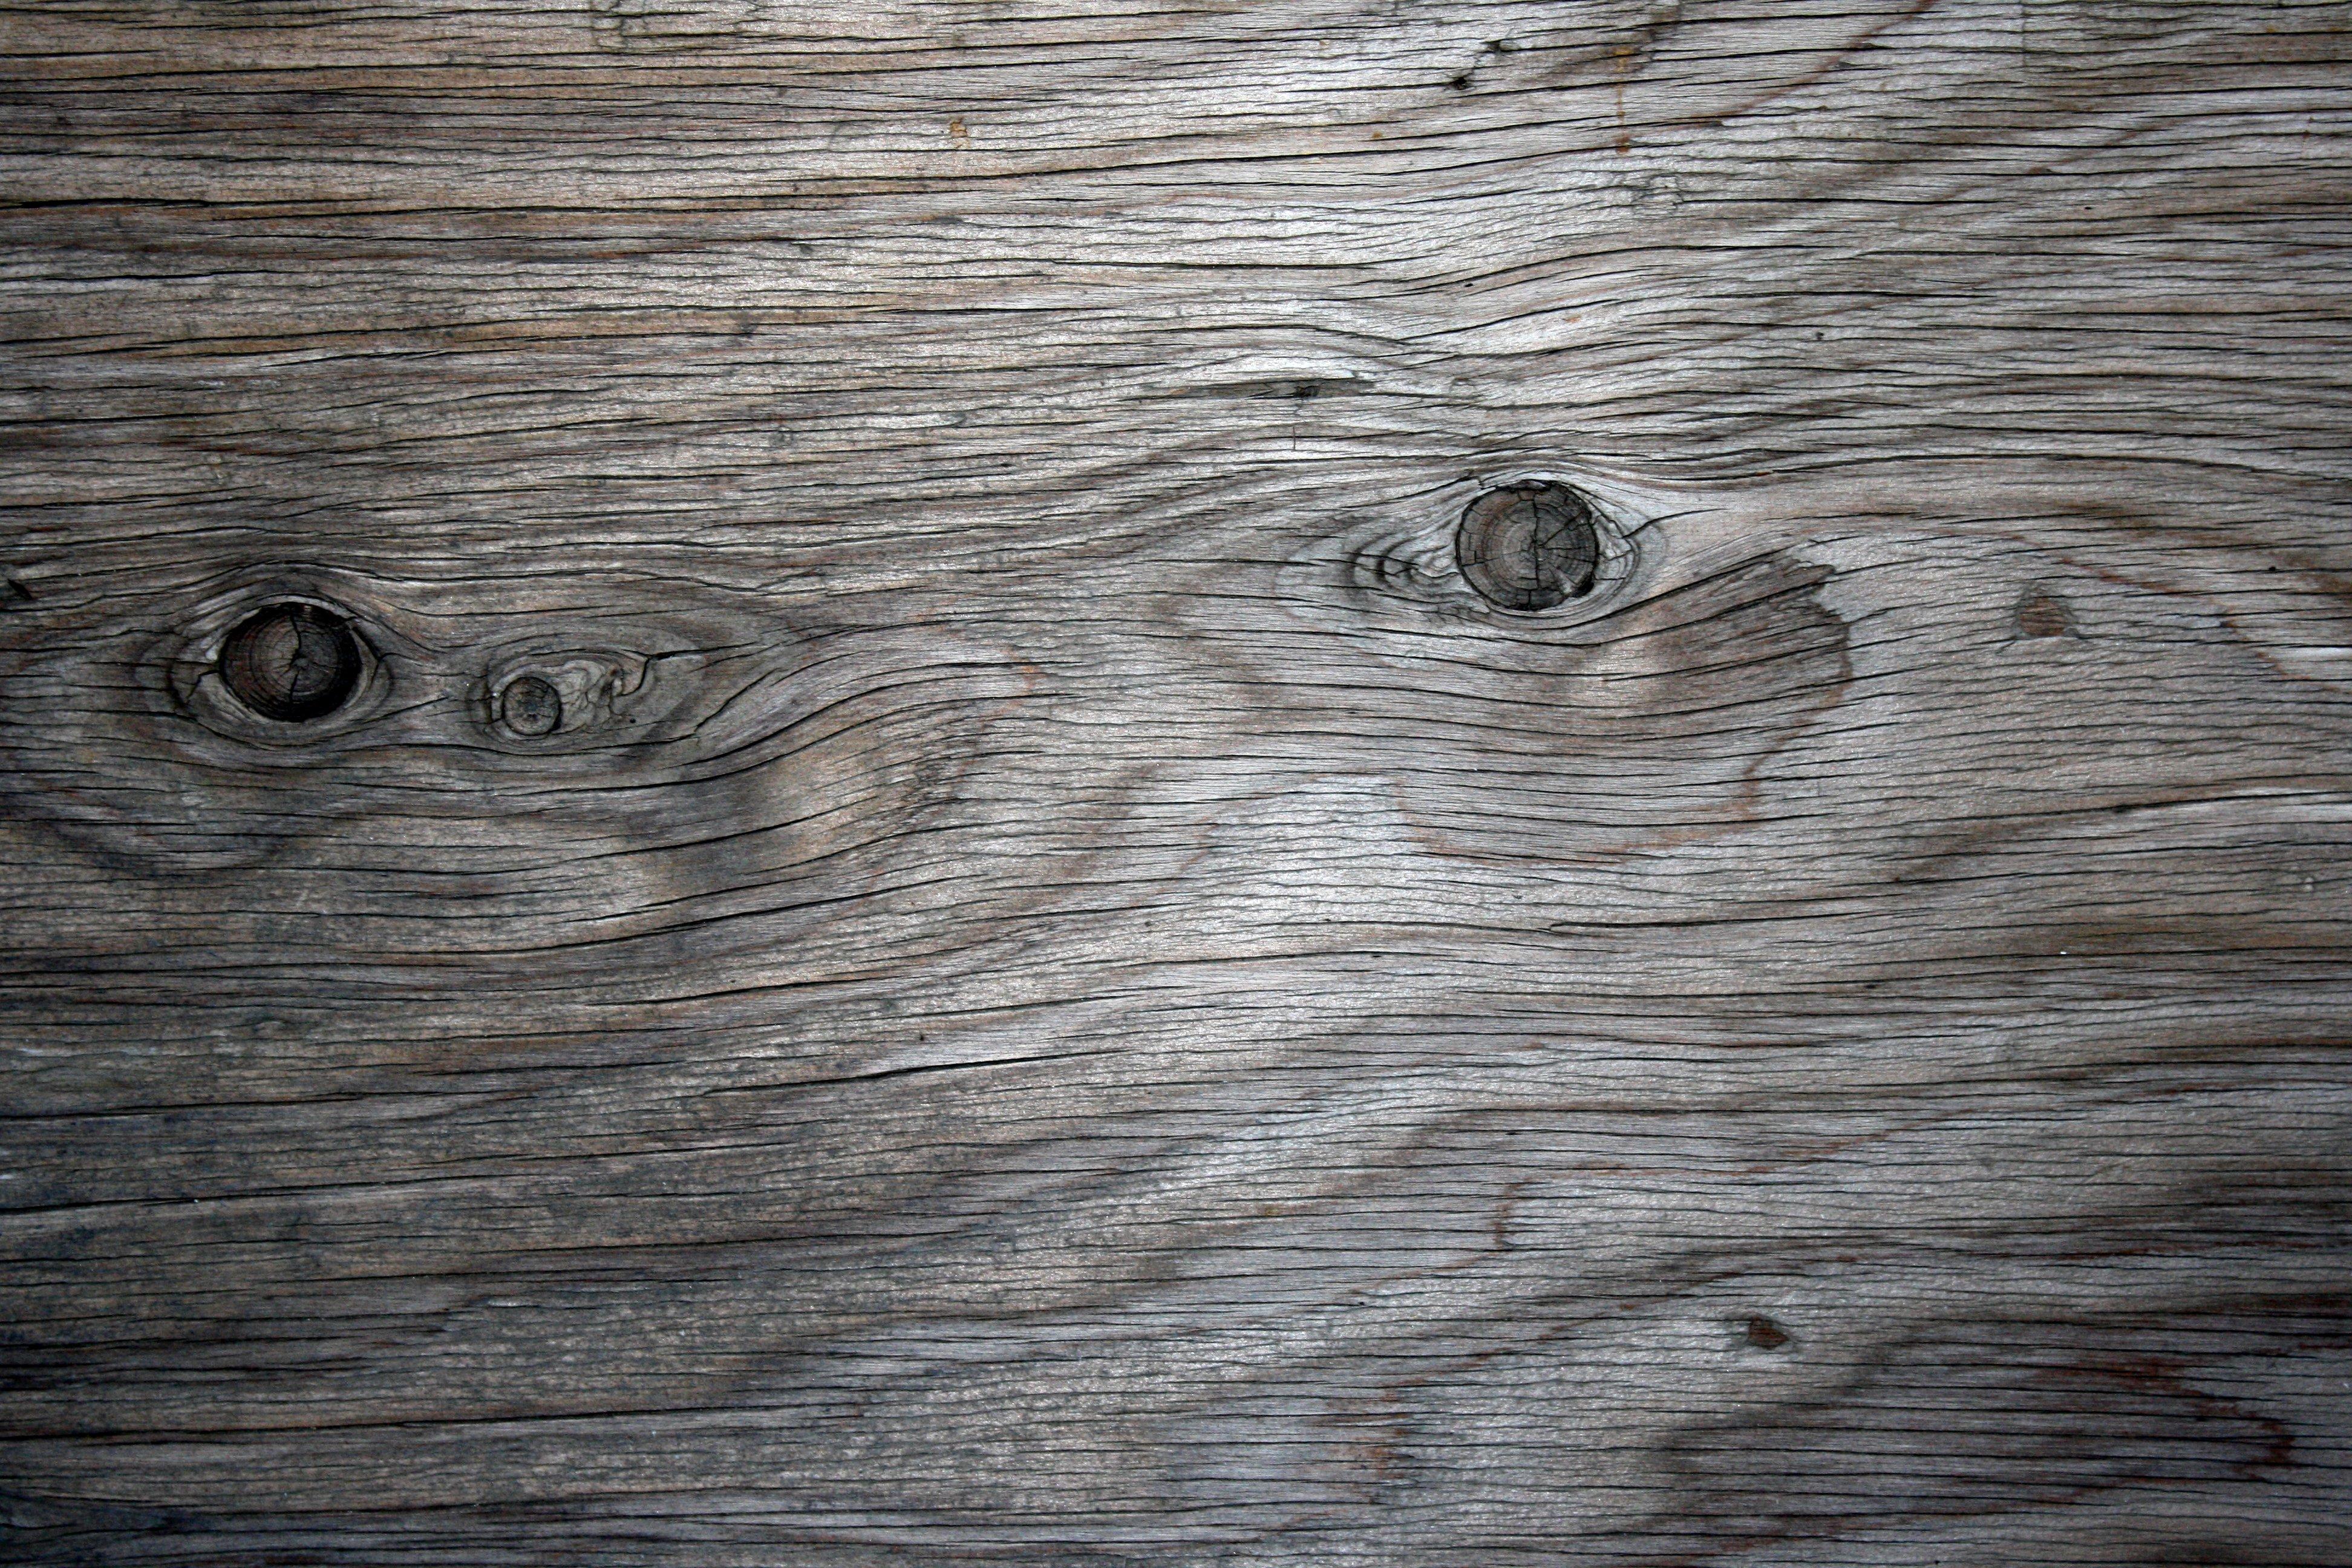 Weathered Wood Grain Textures